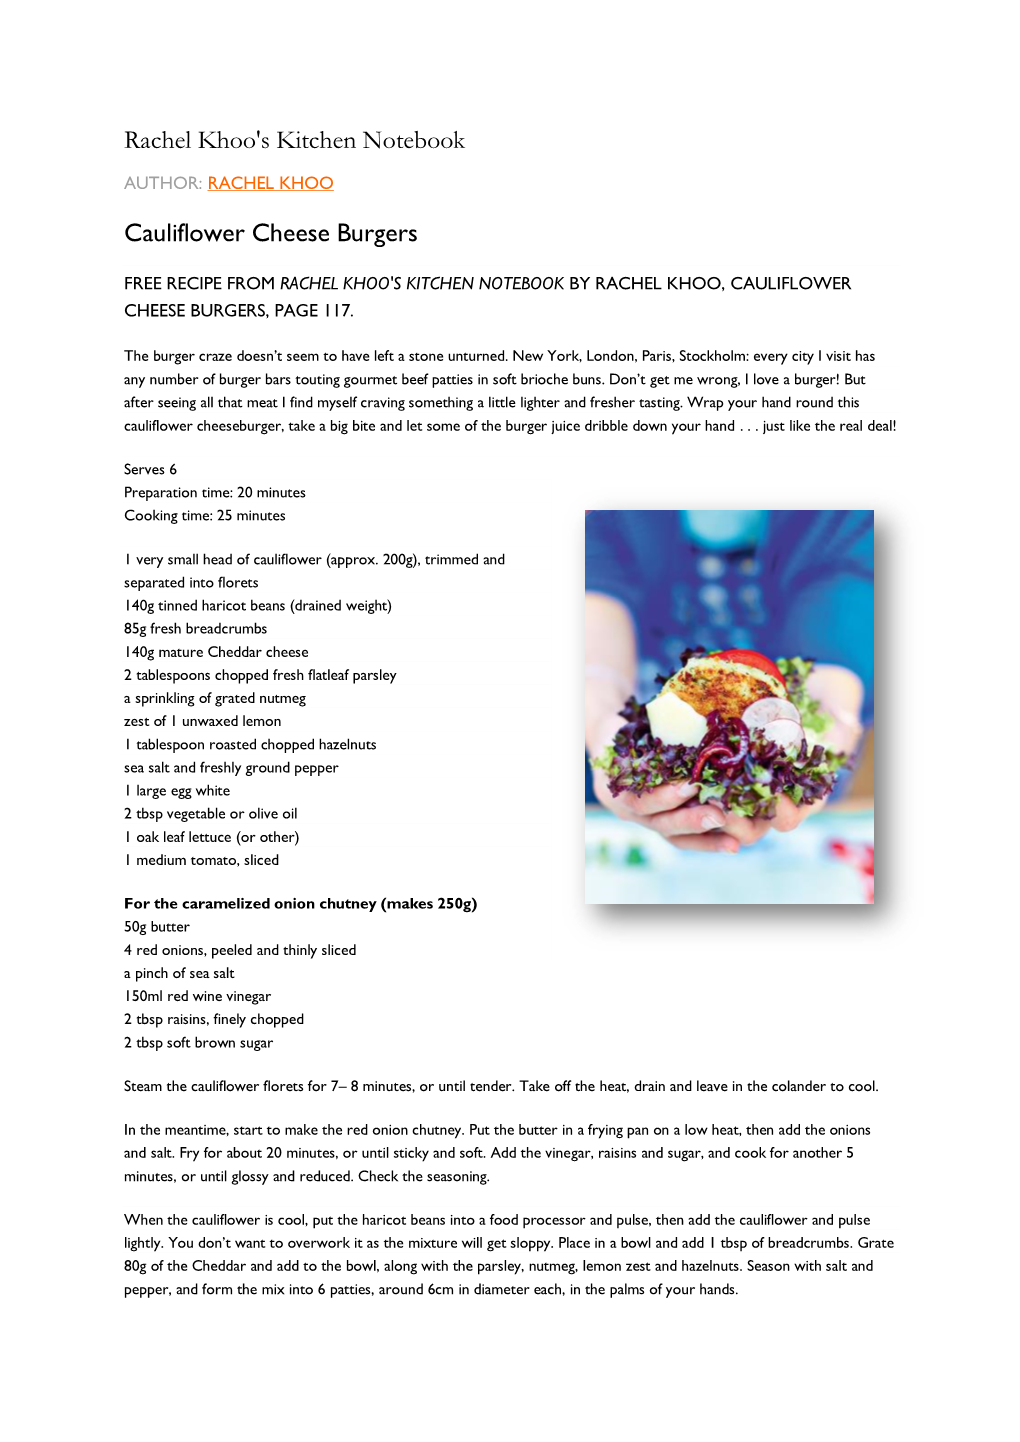 Rachel Khoo's Kitchen Notebook Cauliflower Cheese Burgers